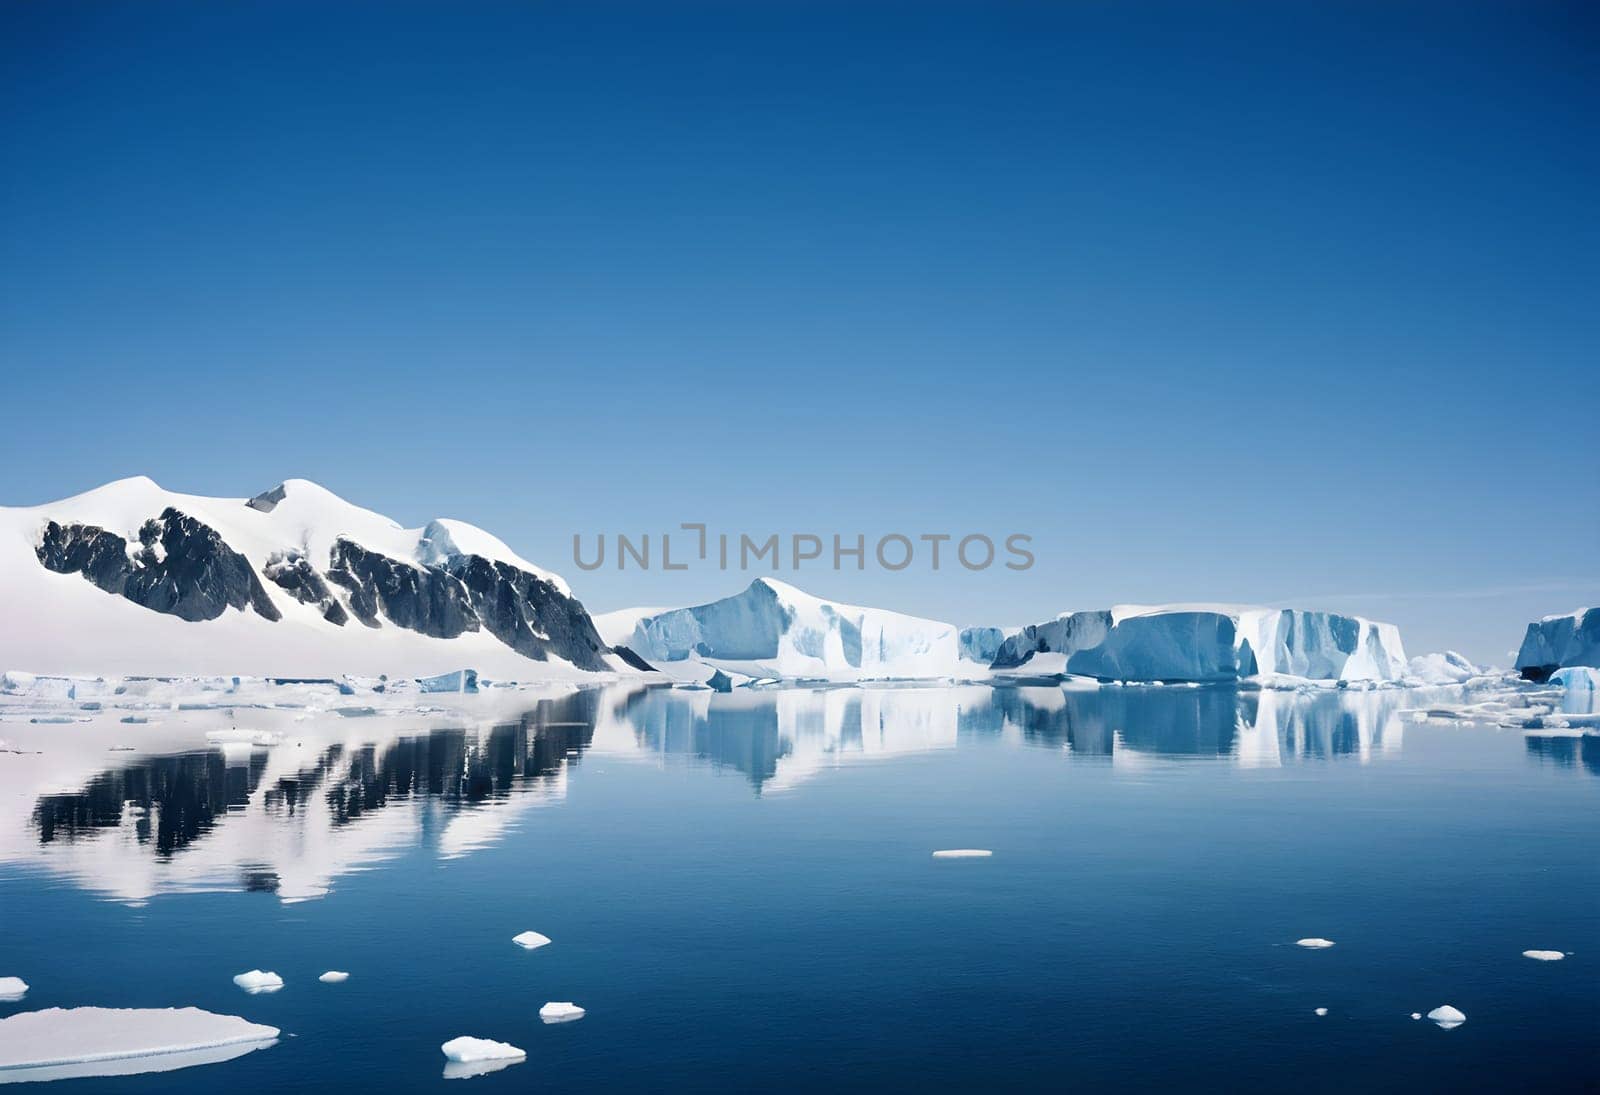 Icy Splendor: Captivating Views of Antarctica's Charcot Harbor and Mountainous Terrain